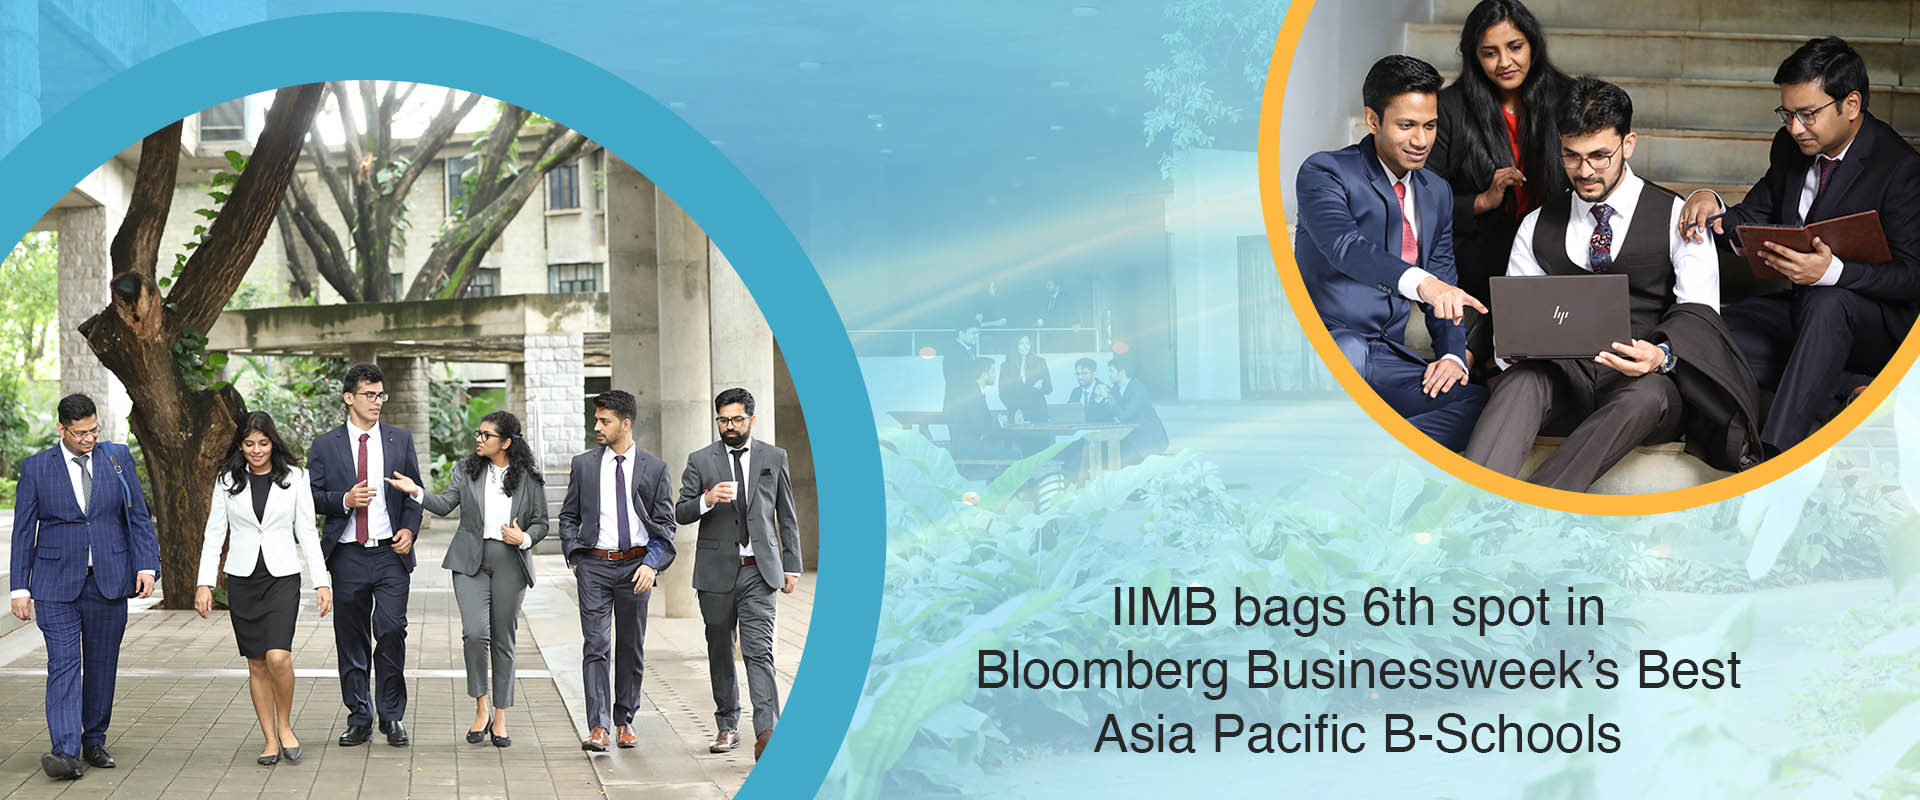 IIMB bags 6th spot in Bloomberg Businessweek’s Best Asia Pacific B-Schools